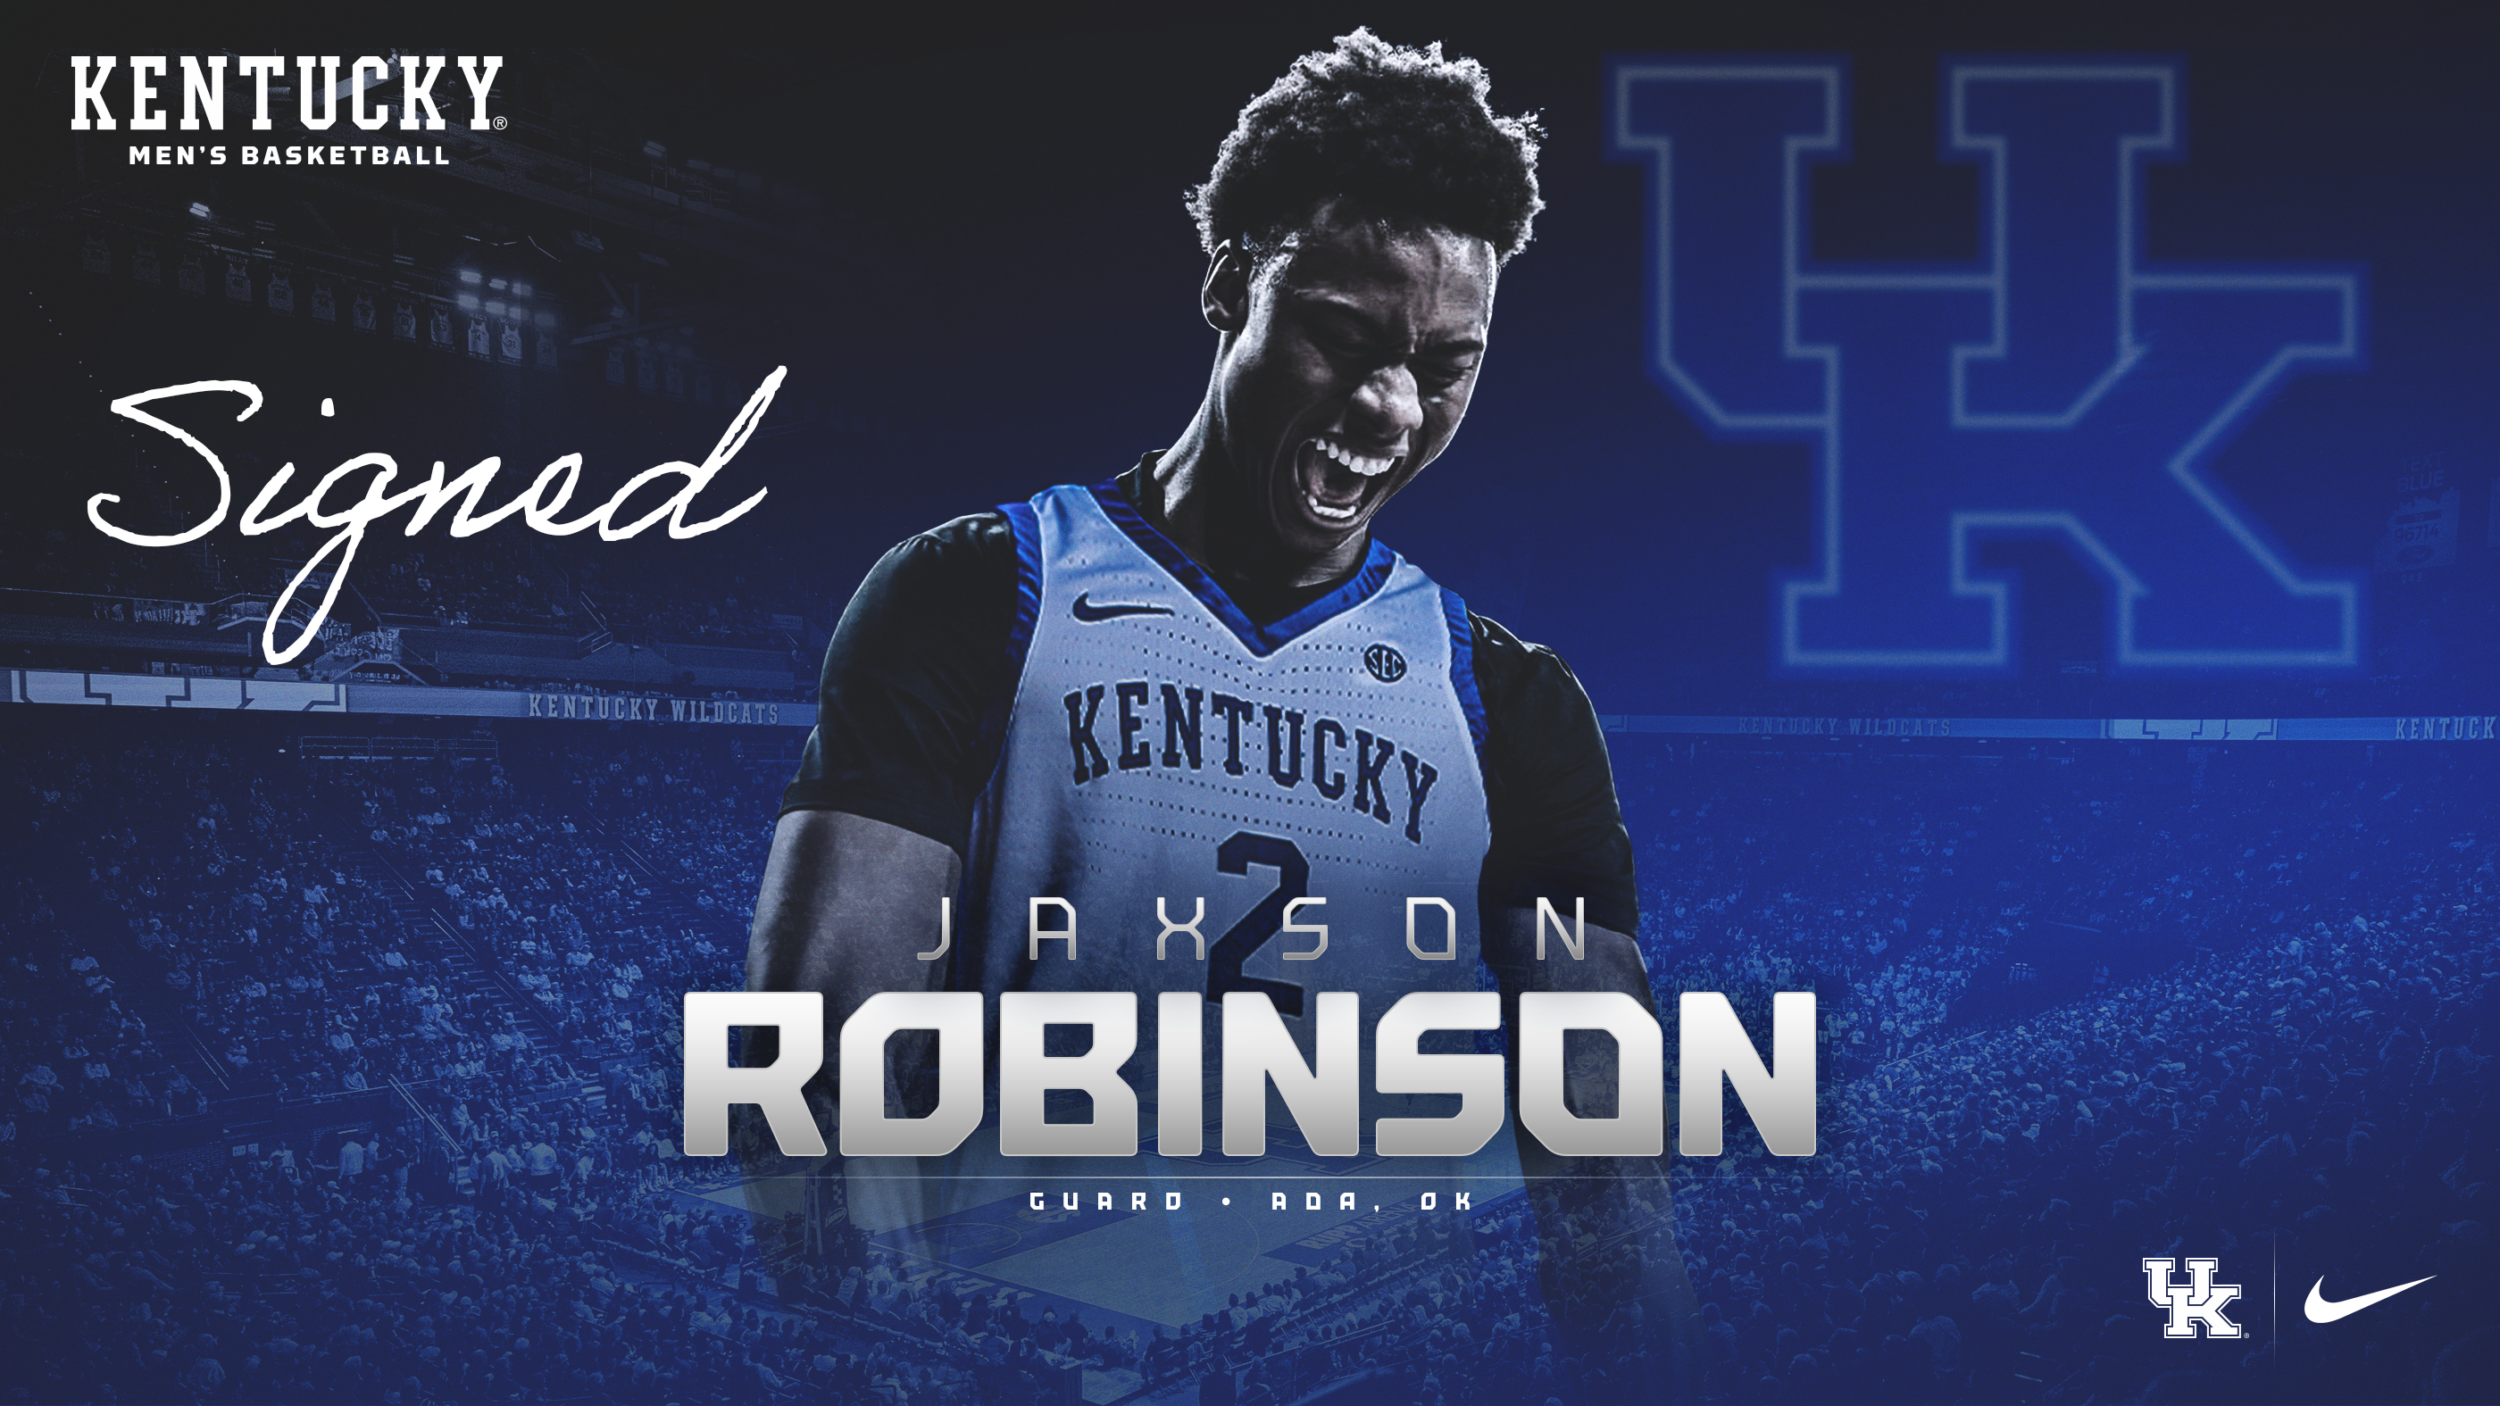 Kentucky Lands Big 12 Sixth Man of the Year in Jaxson Robinson